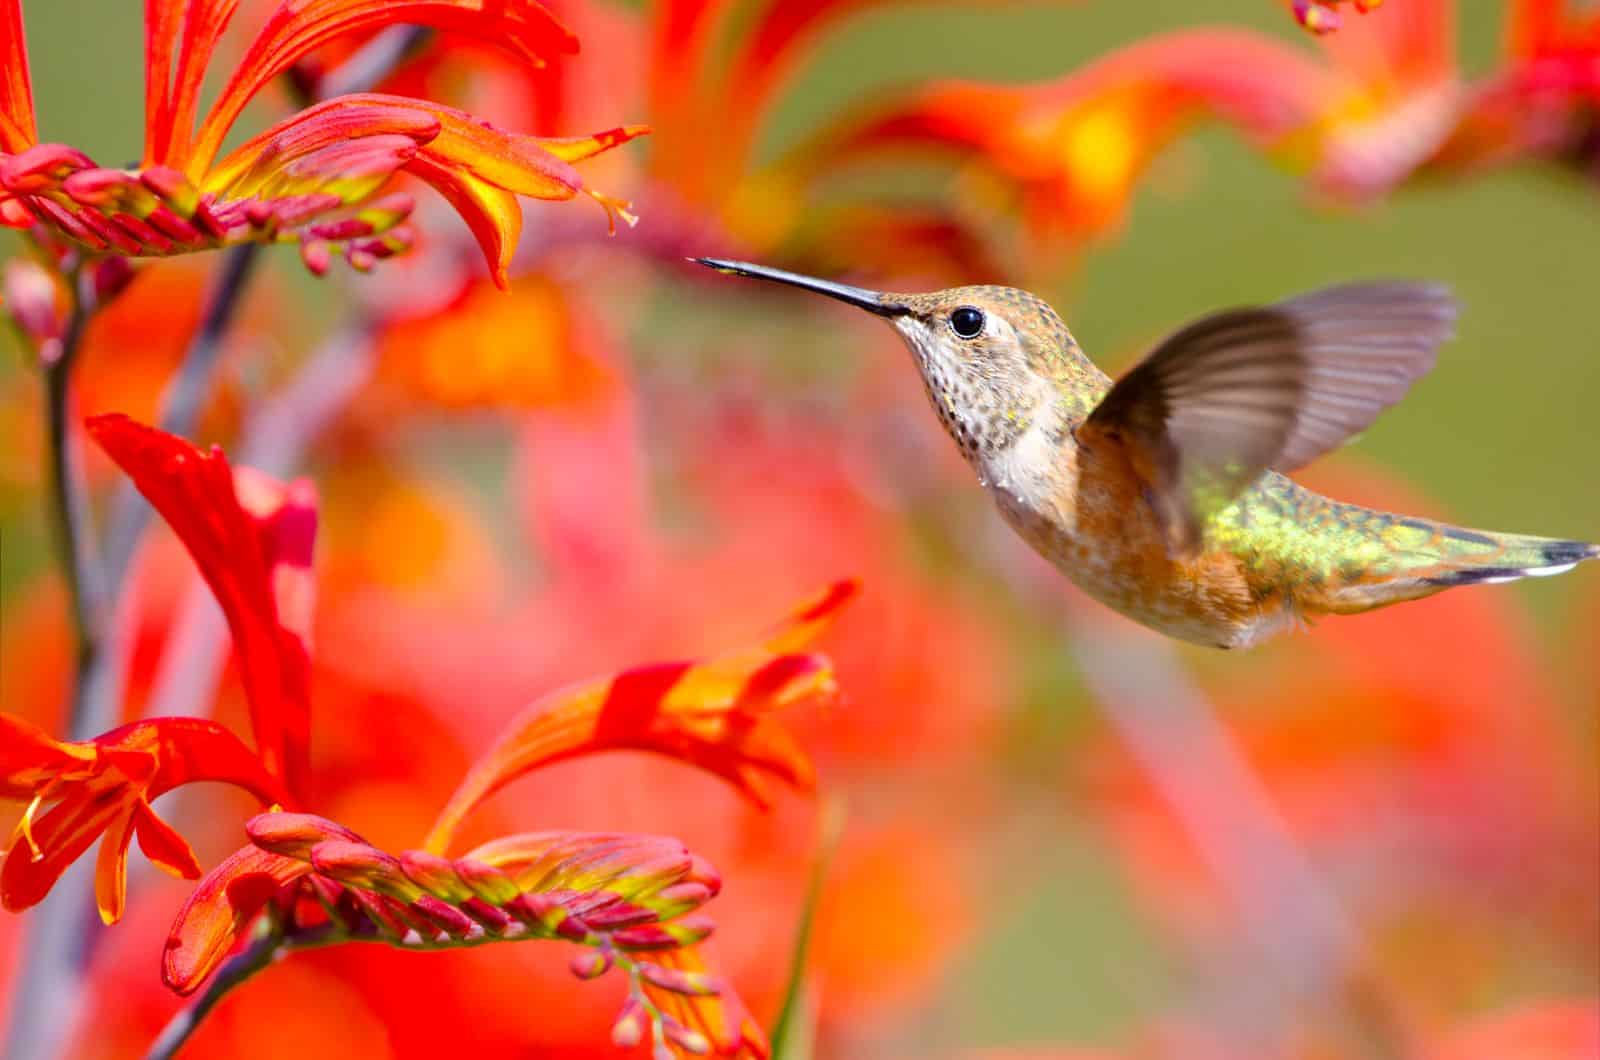 Rufous hummingbird feeding on Crocosmia flowers